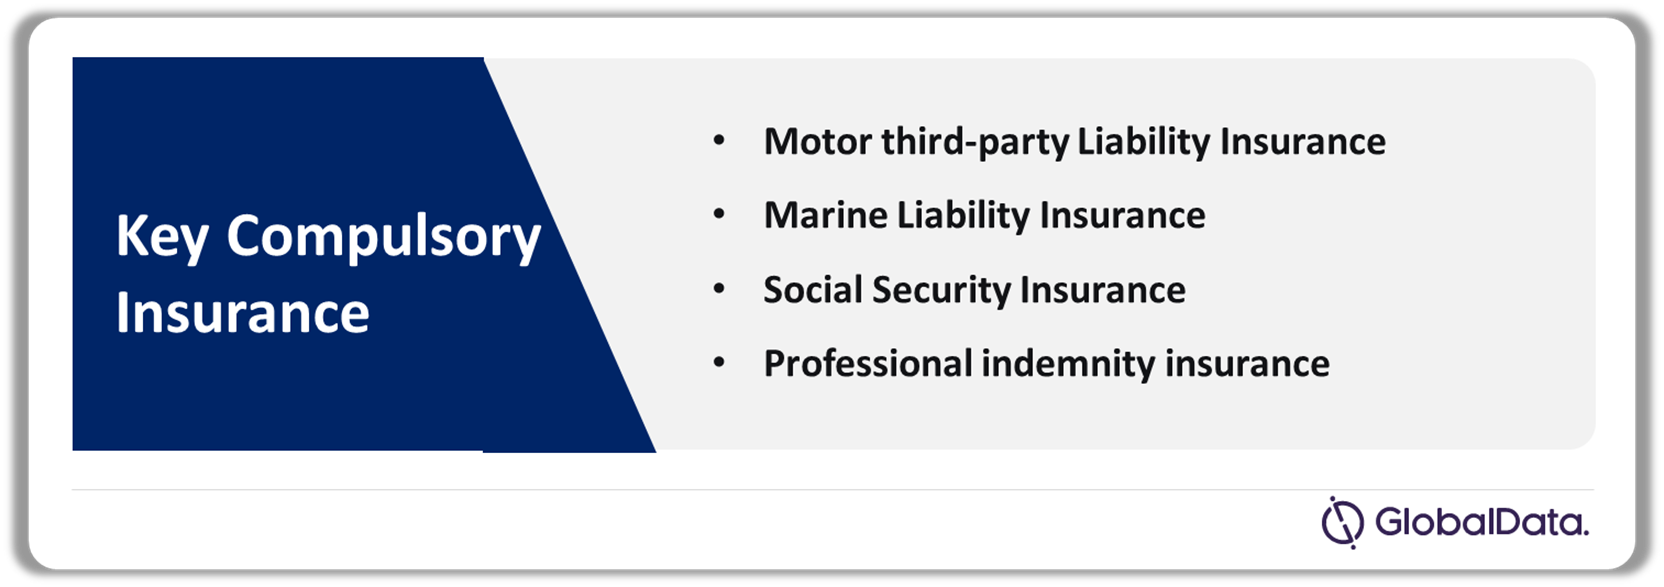 New Zealand Insurance Industry Analysis by Compulsory Insurances